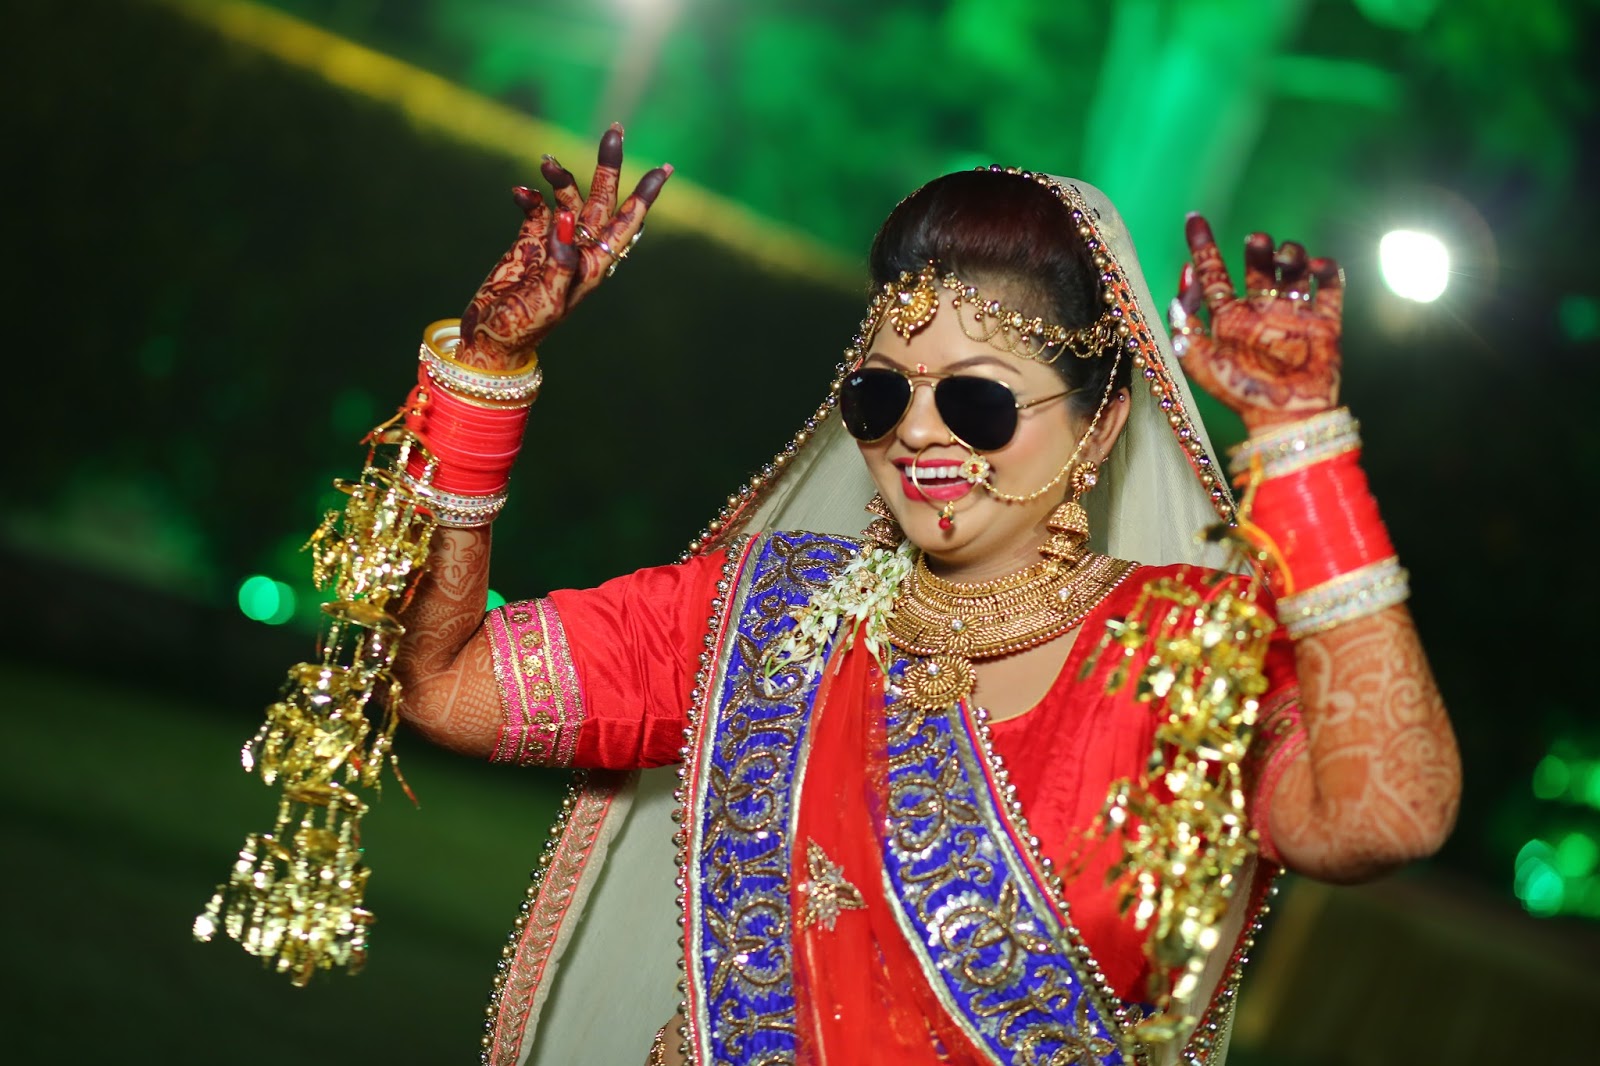 Best wedding photographer in kanpur, uttar pradesh, India: PHOTOGRAPHY